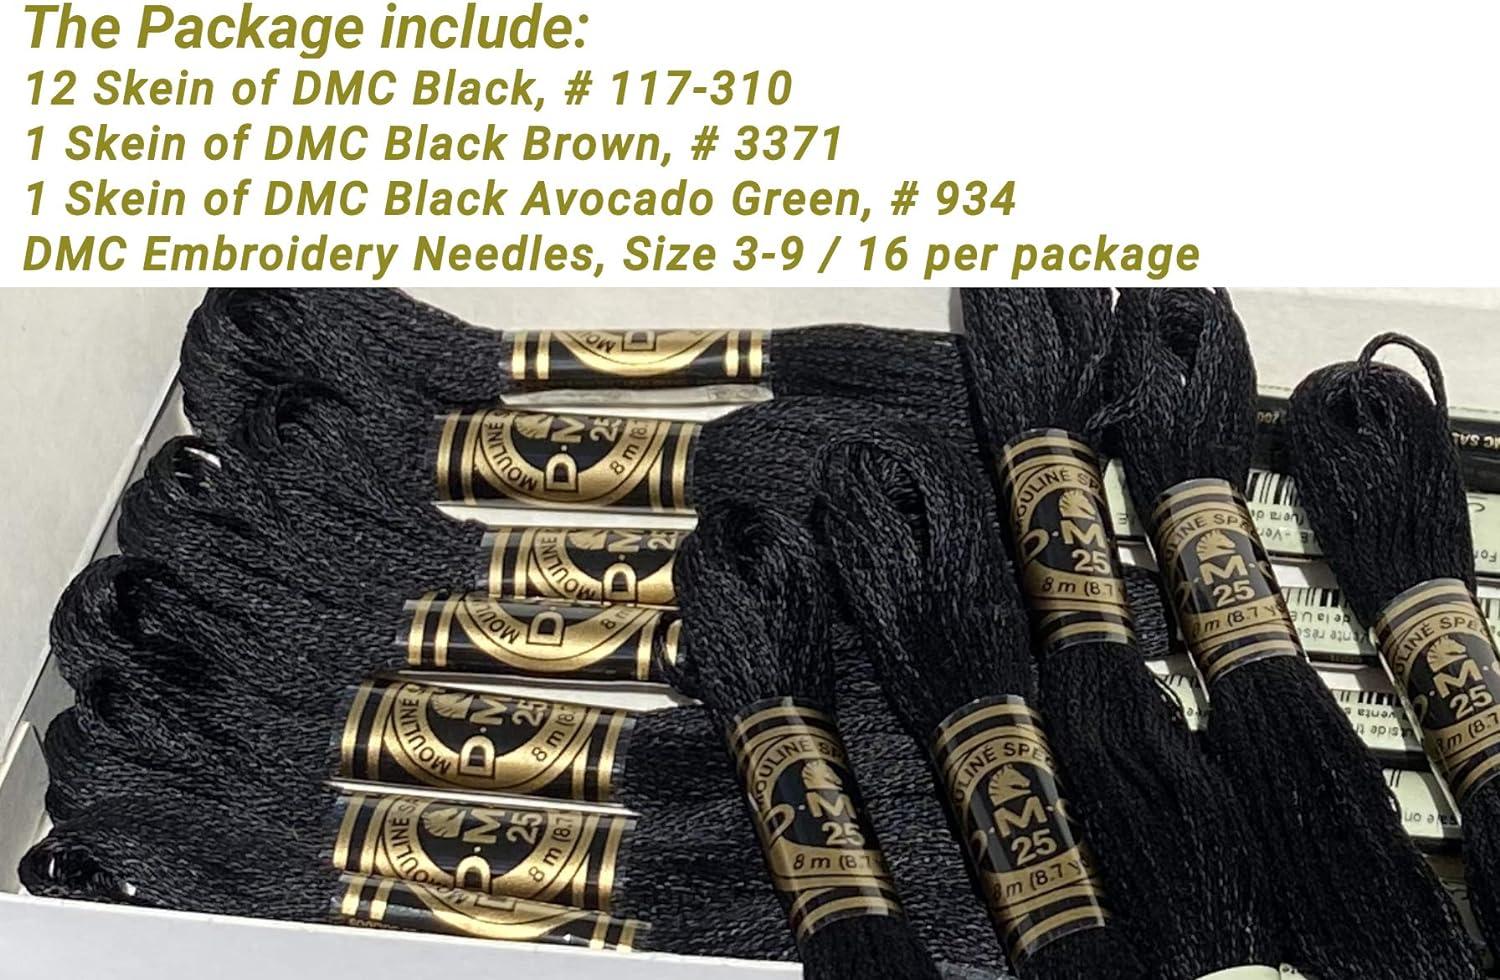 DMC Black Embroidery Floss 6 Strand Cotton Black Thread 12/Pack Bundle  with1Skein of Each DMC Black Brown and DMC Black Avocado with a Set of DMC  Cross Stitch Needles Black Premium String/Yarn